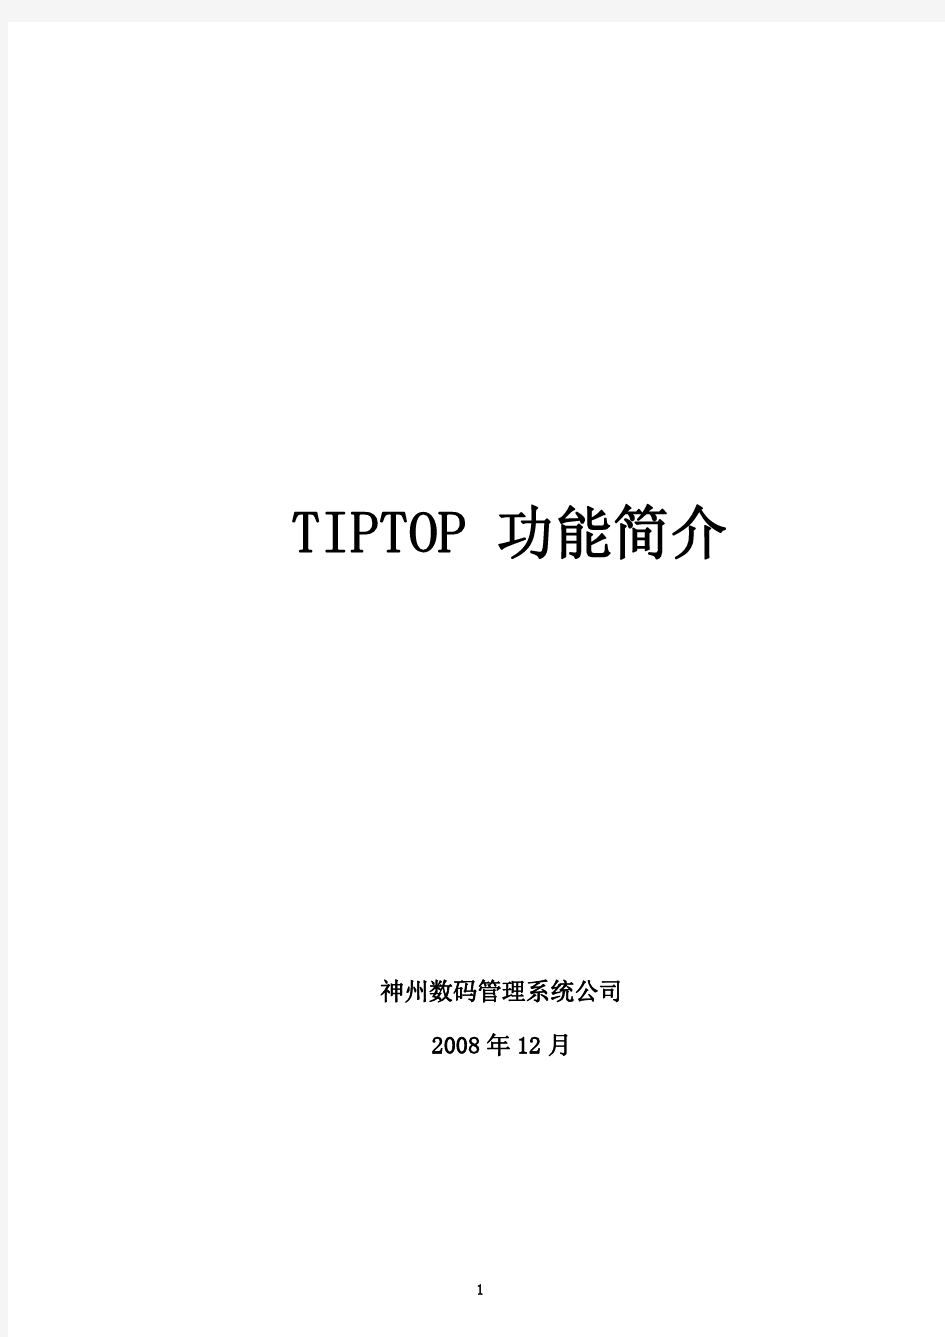 TIPTOP功能简介